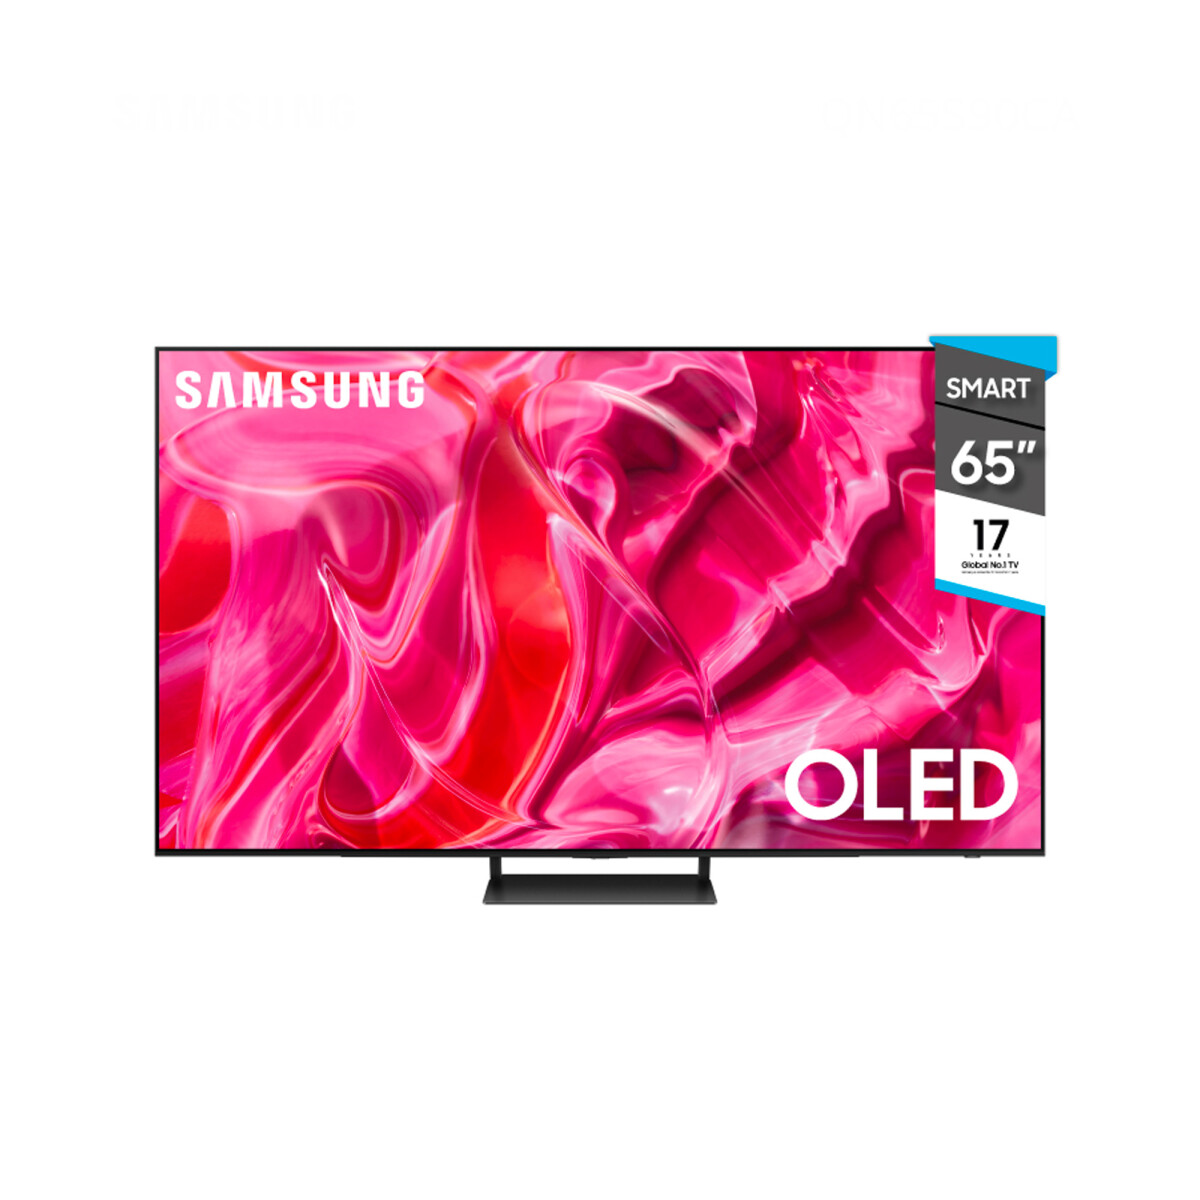 Smart TV Samsung OLED 65" - 65" 4K 